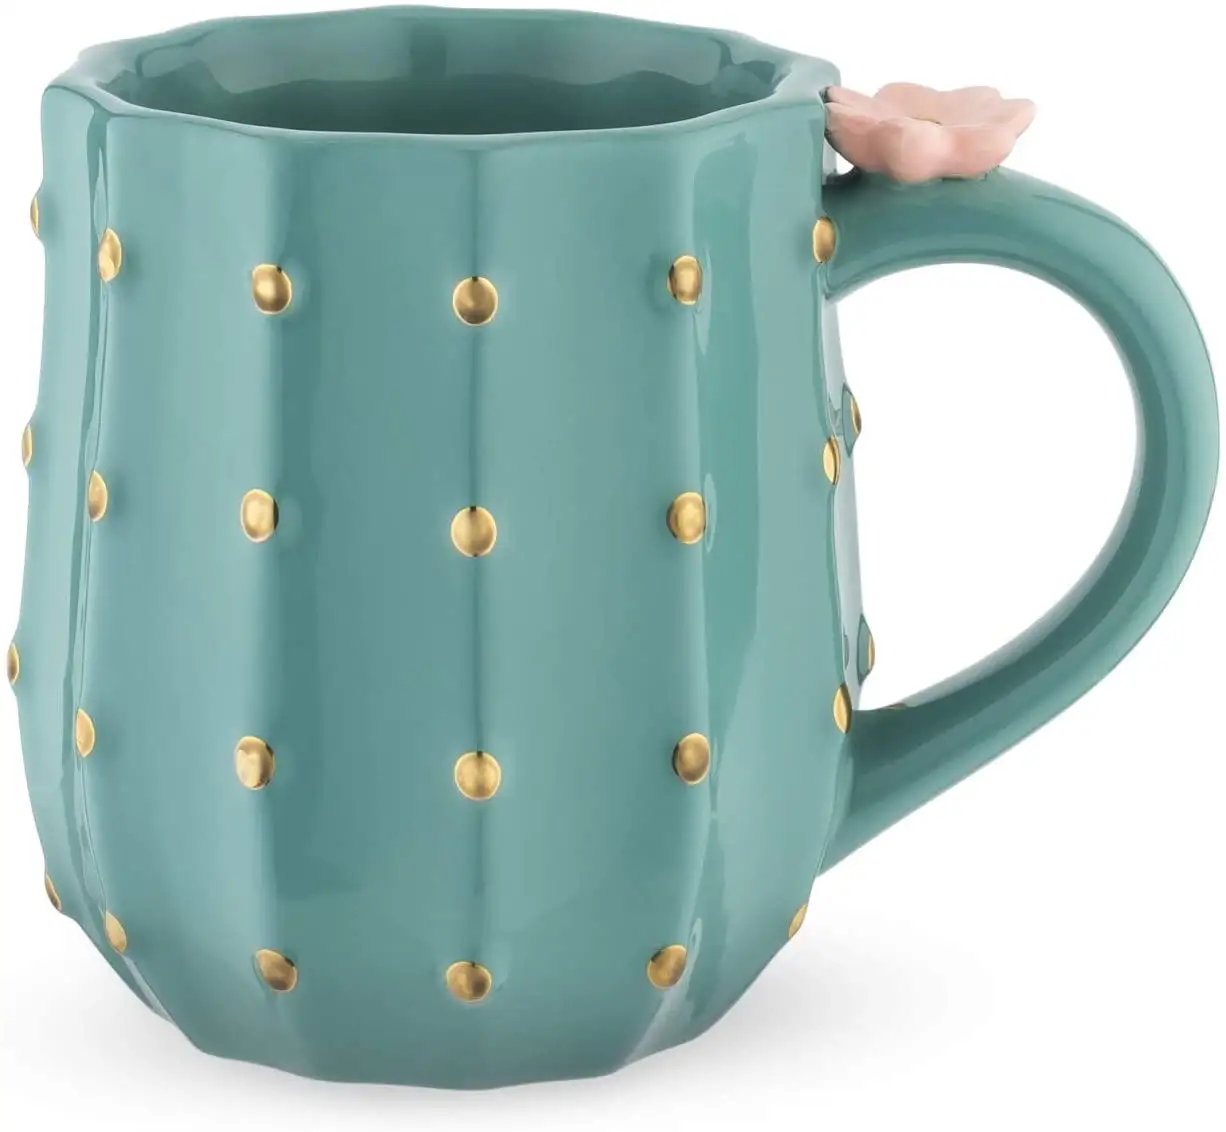 Cactus Mug 3D Green Ceramic Gold Details Holds 10 Ounces Coffee & Tea Accessories Cute Succulent Coffee Mug